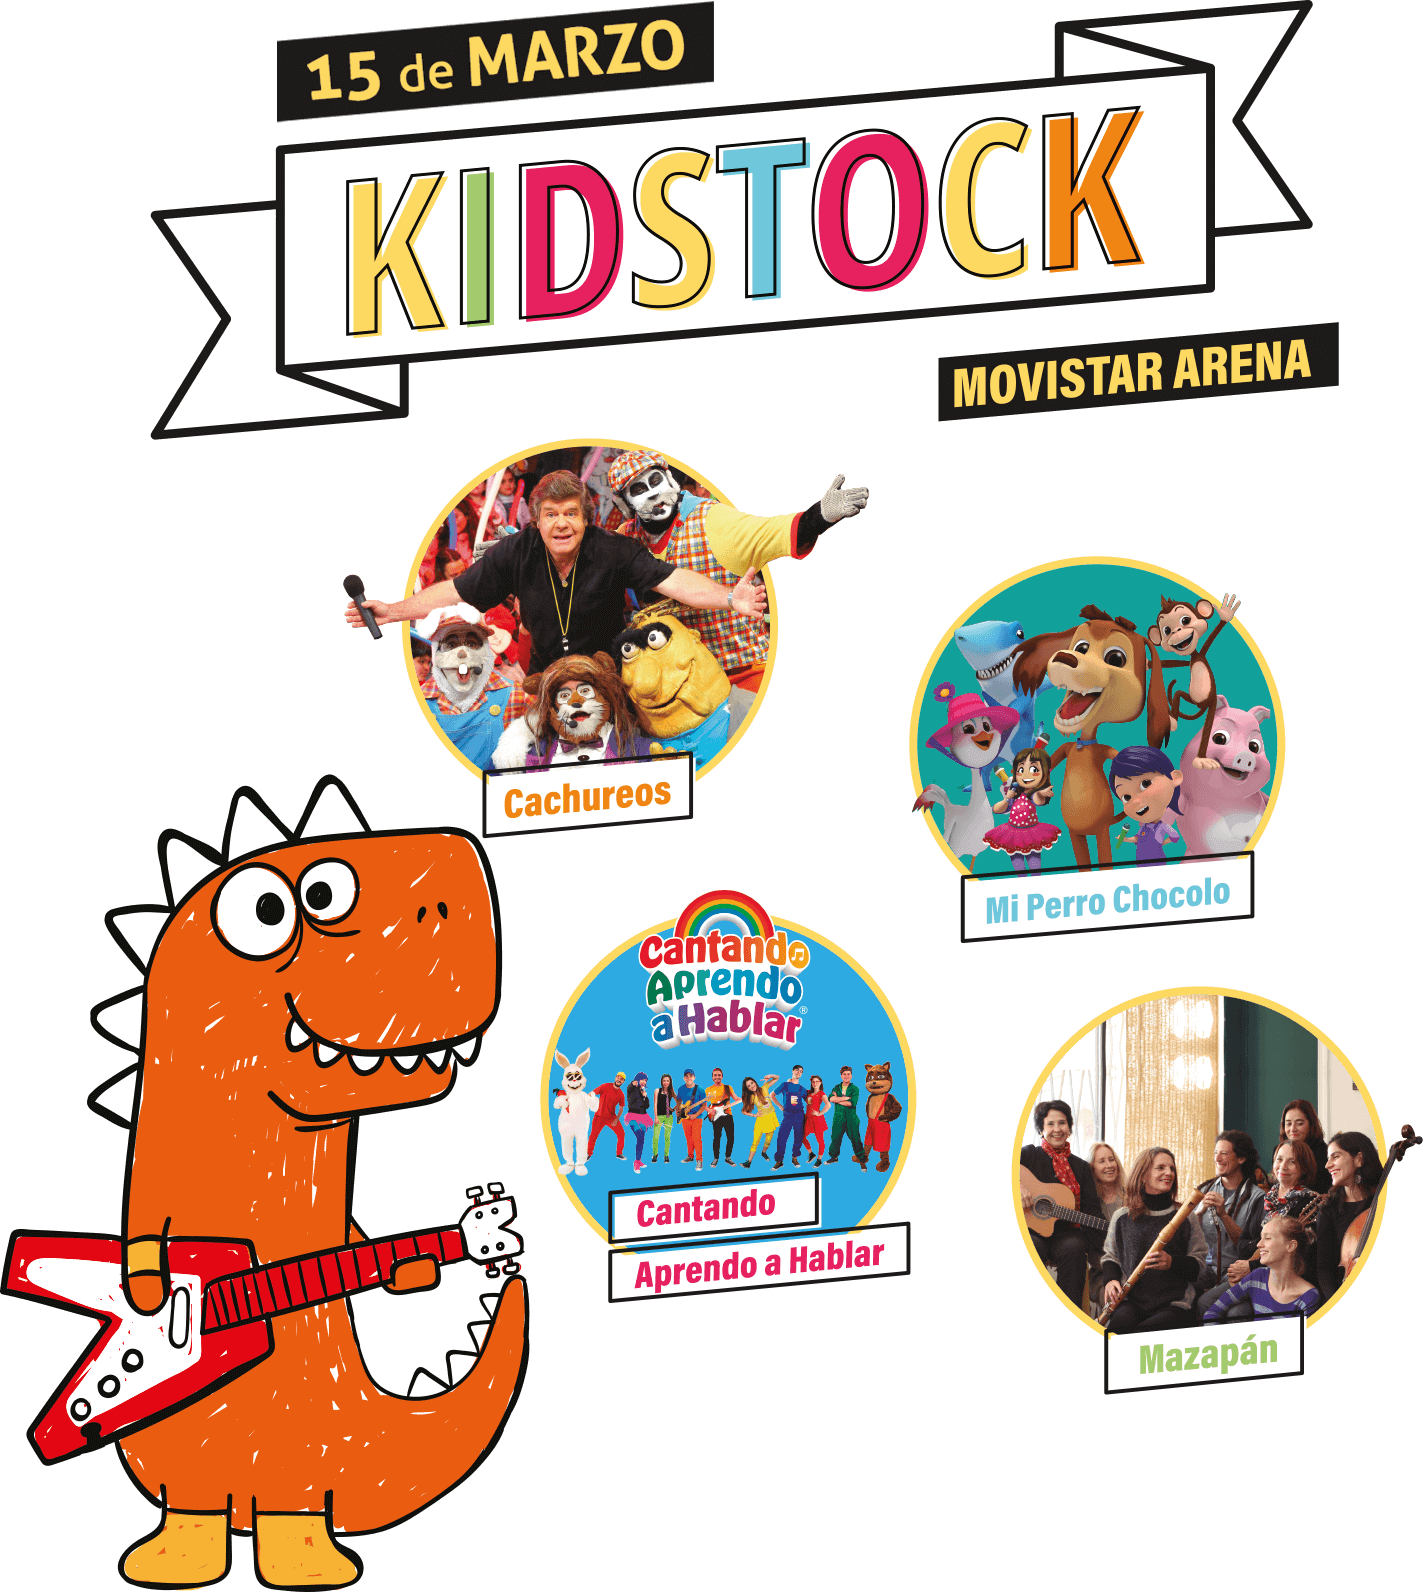 Festival Kidstock | 27 de octubre 2019 - Movistar Arena